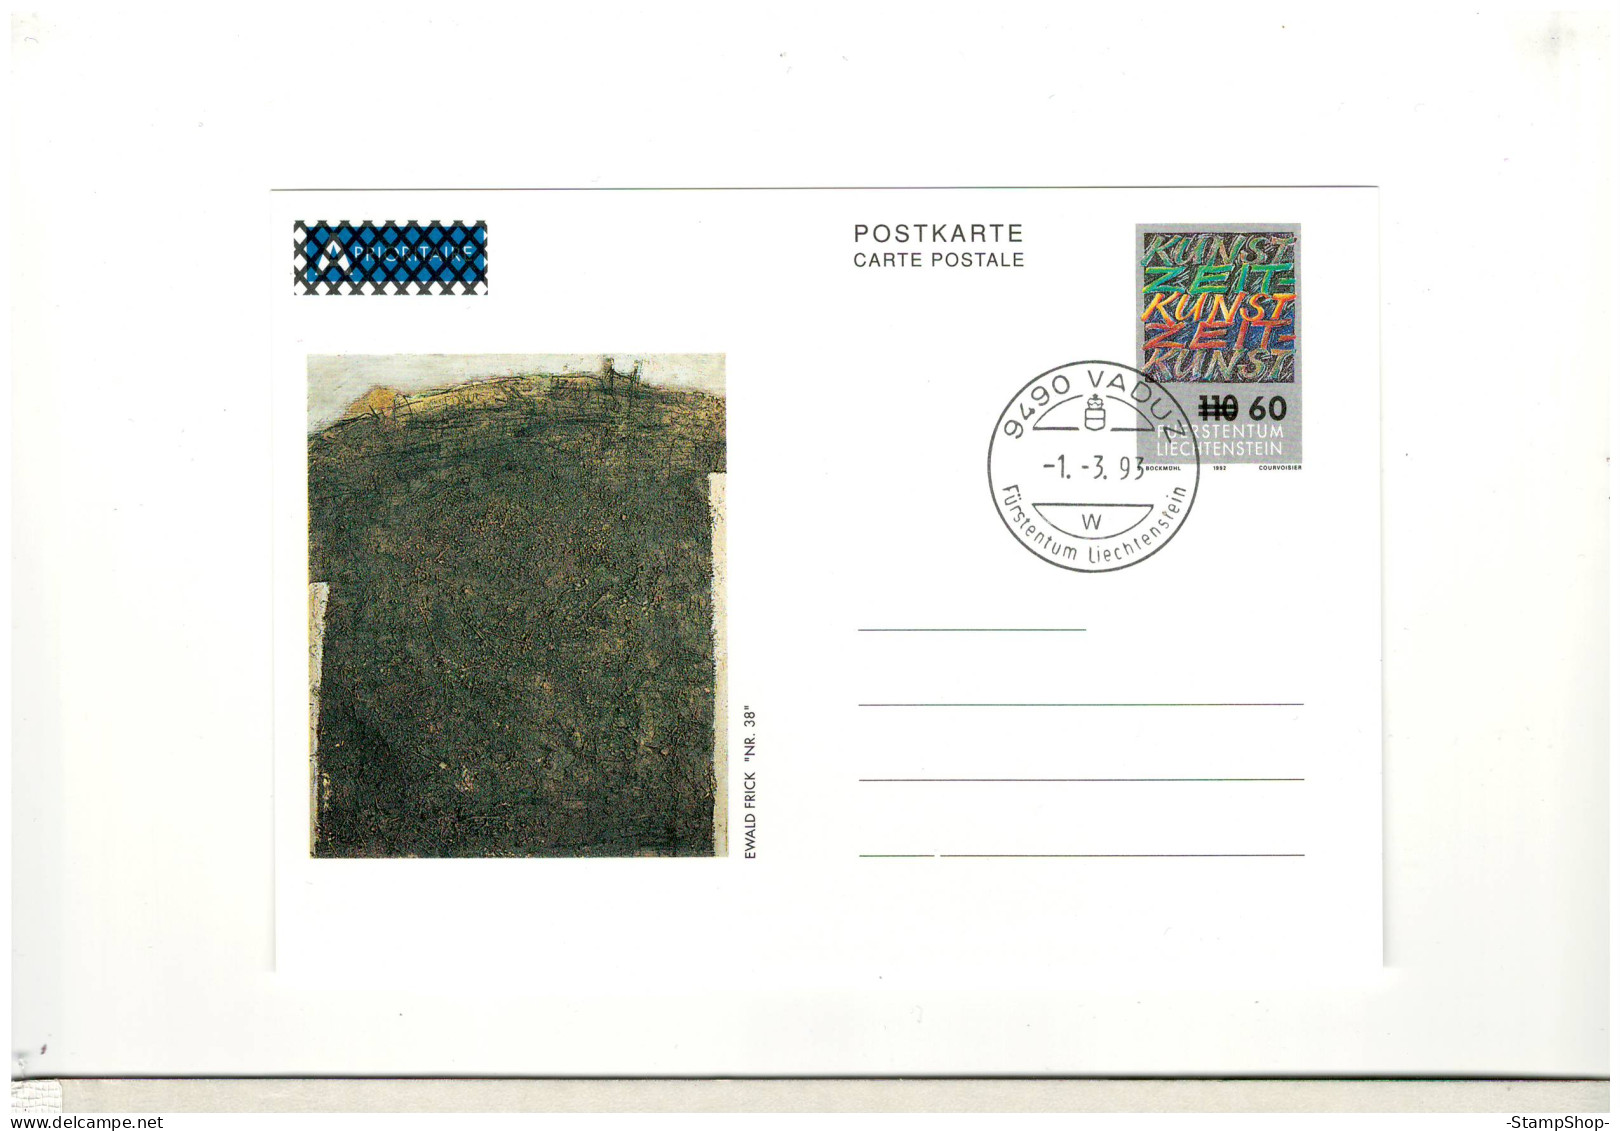 1993 Liechtenstein - Vaduz Postmark, Art, Overprint With Lower Value - Postcard - BX2043 - Briefe U. Dokumente